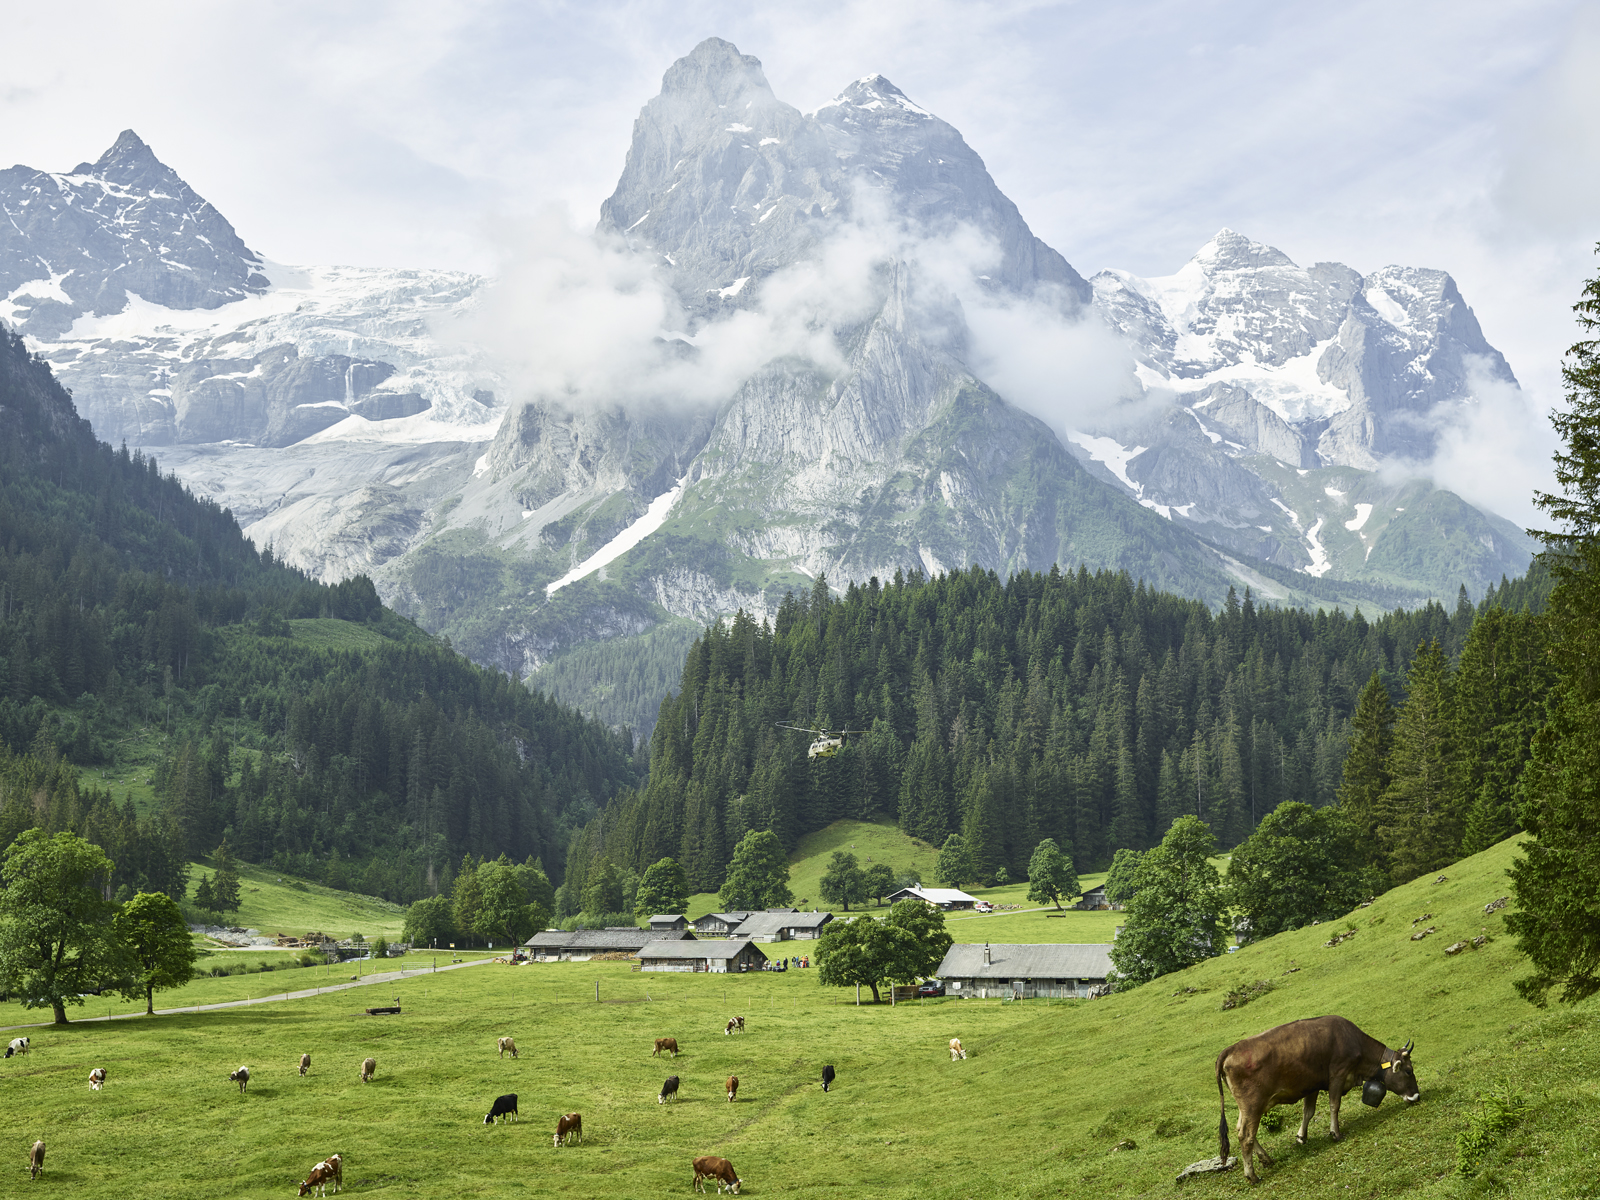 Grosse Scheidegg, Berneses Alps Switzerland, Swiss Alps, near Meiringen and Grindelwald, Mountain pass, cycling, landscape photography